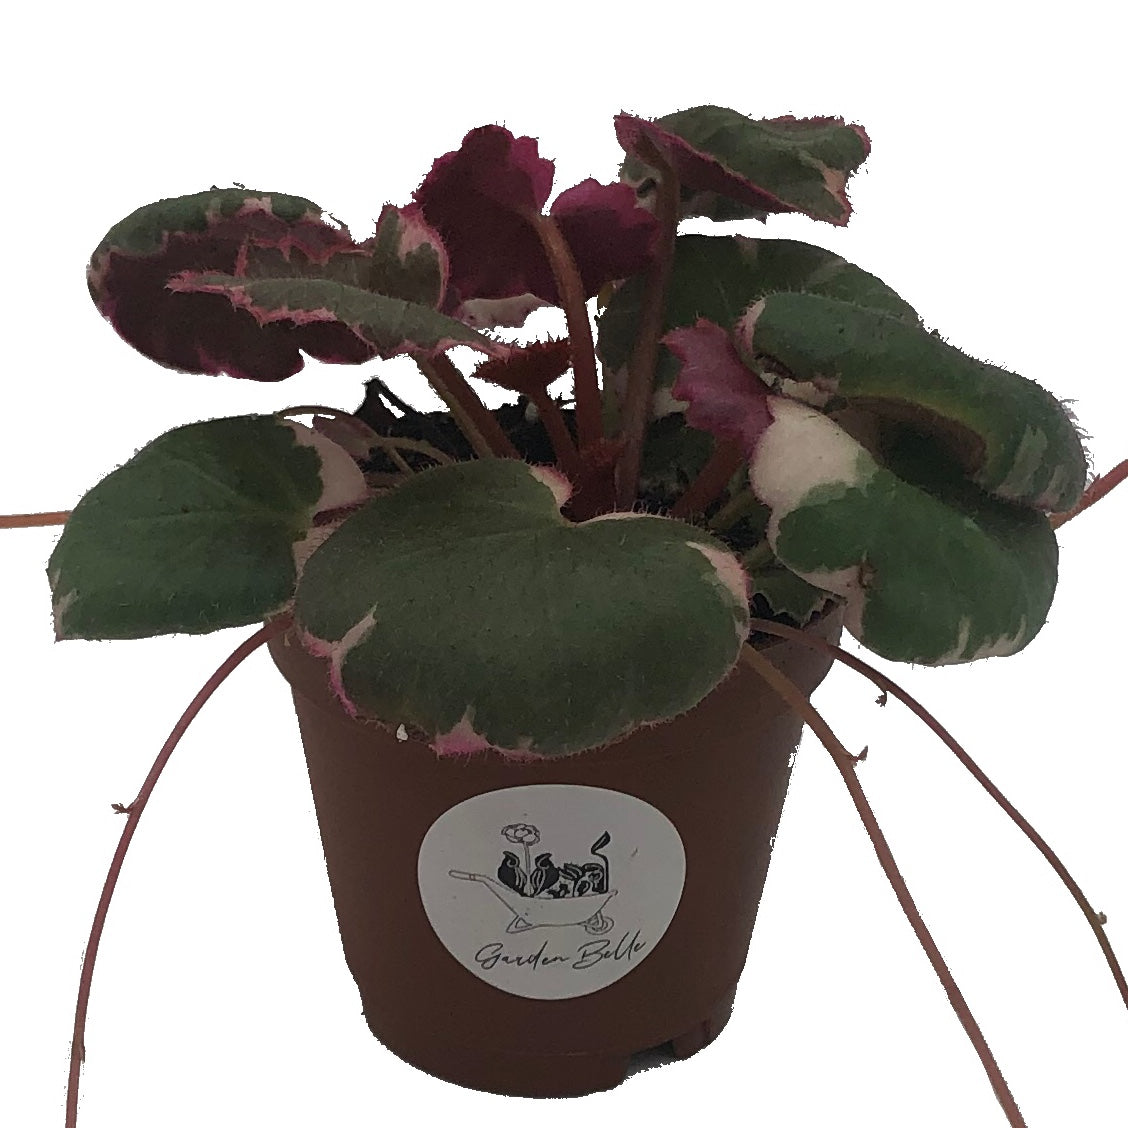 Variegated Strawberry Begonia (Saxifraga Stolonifera Variegata) In 2” Pot